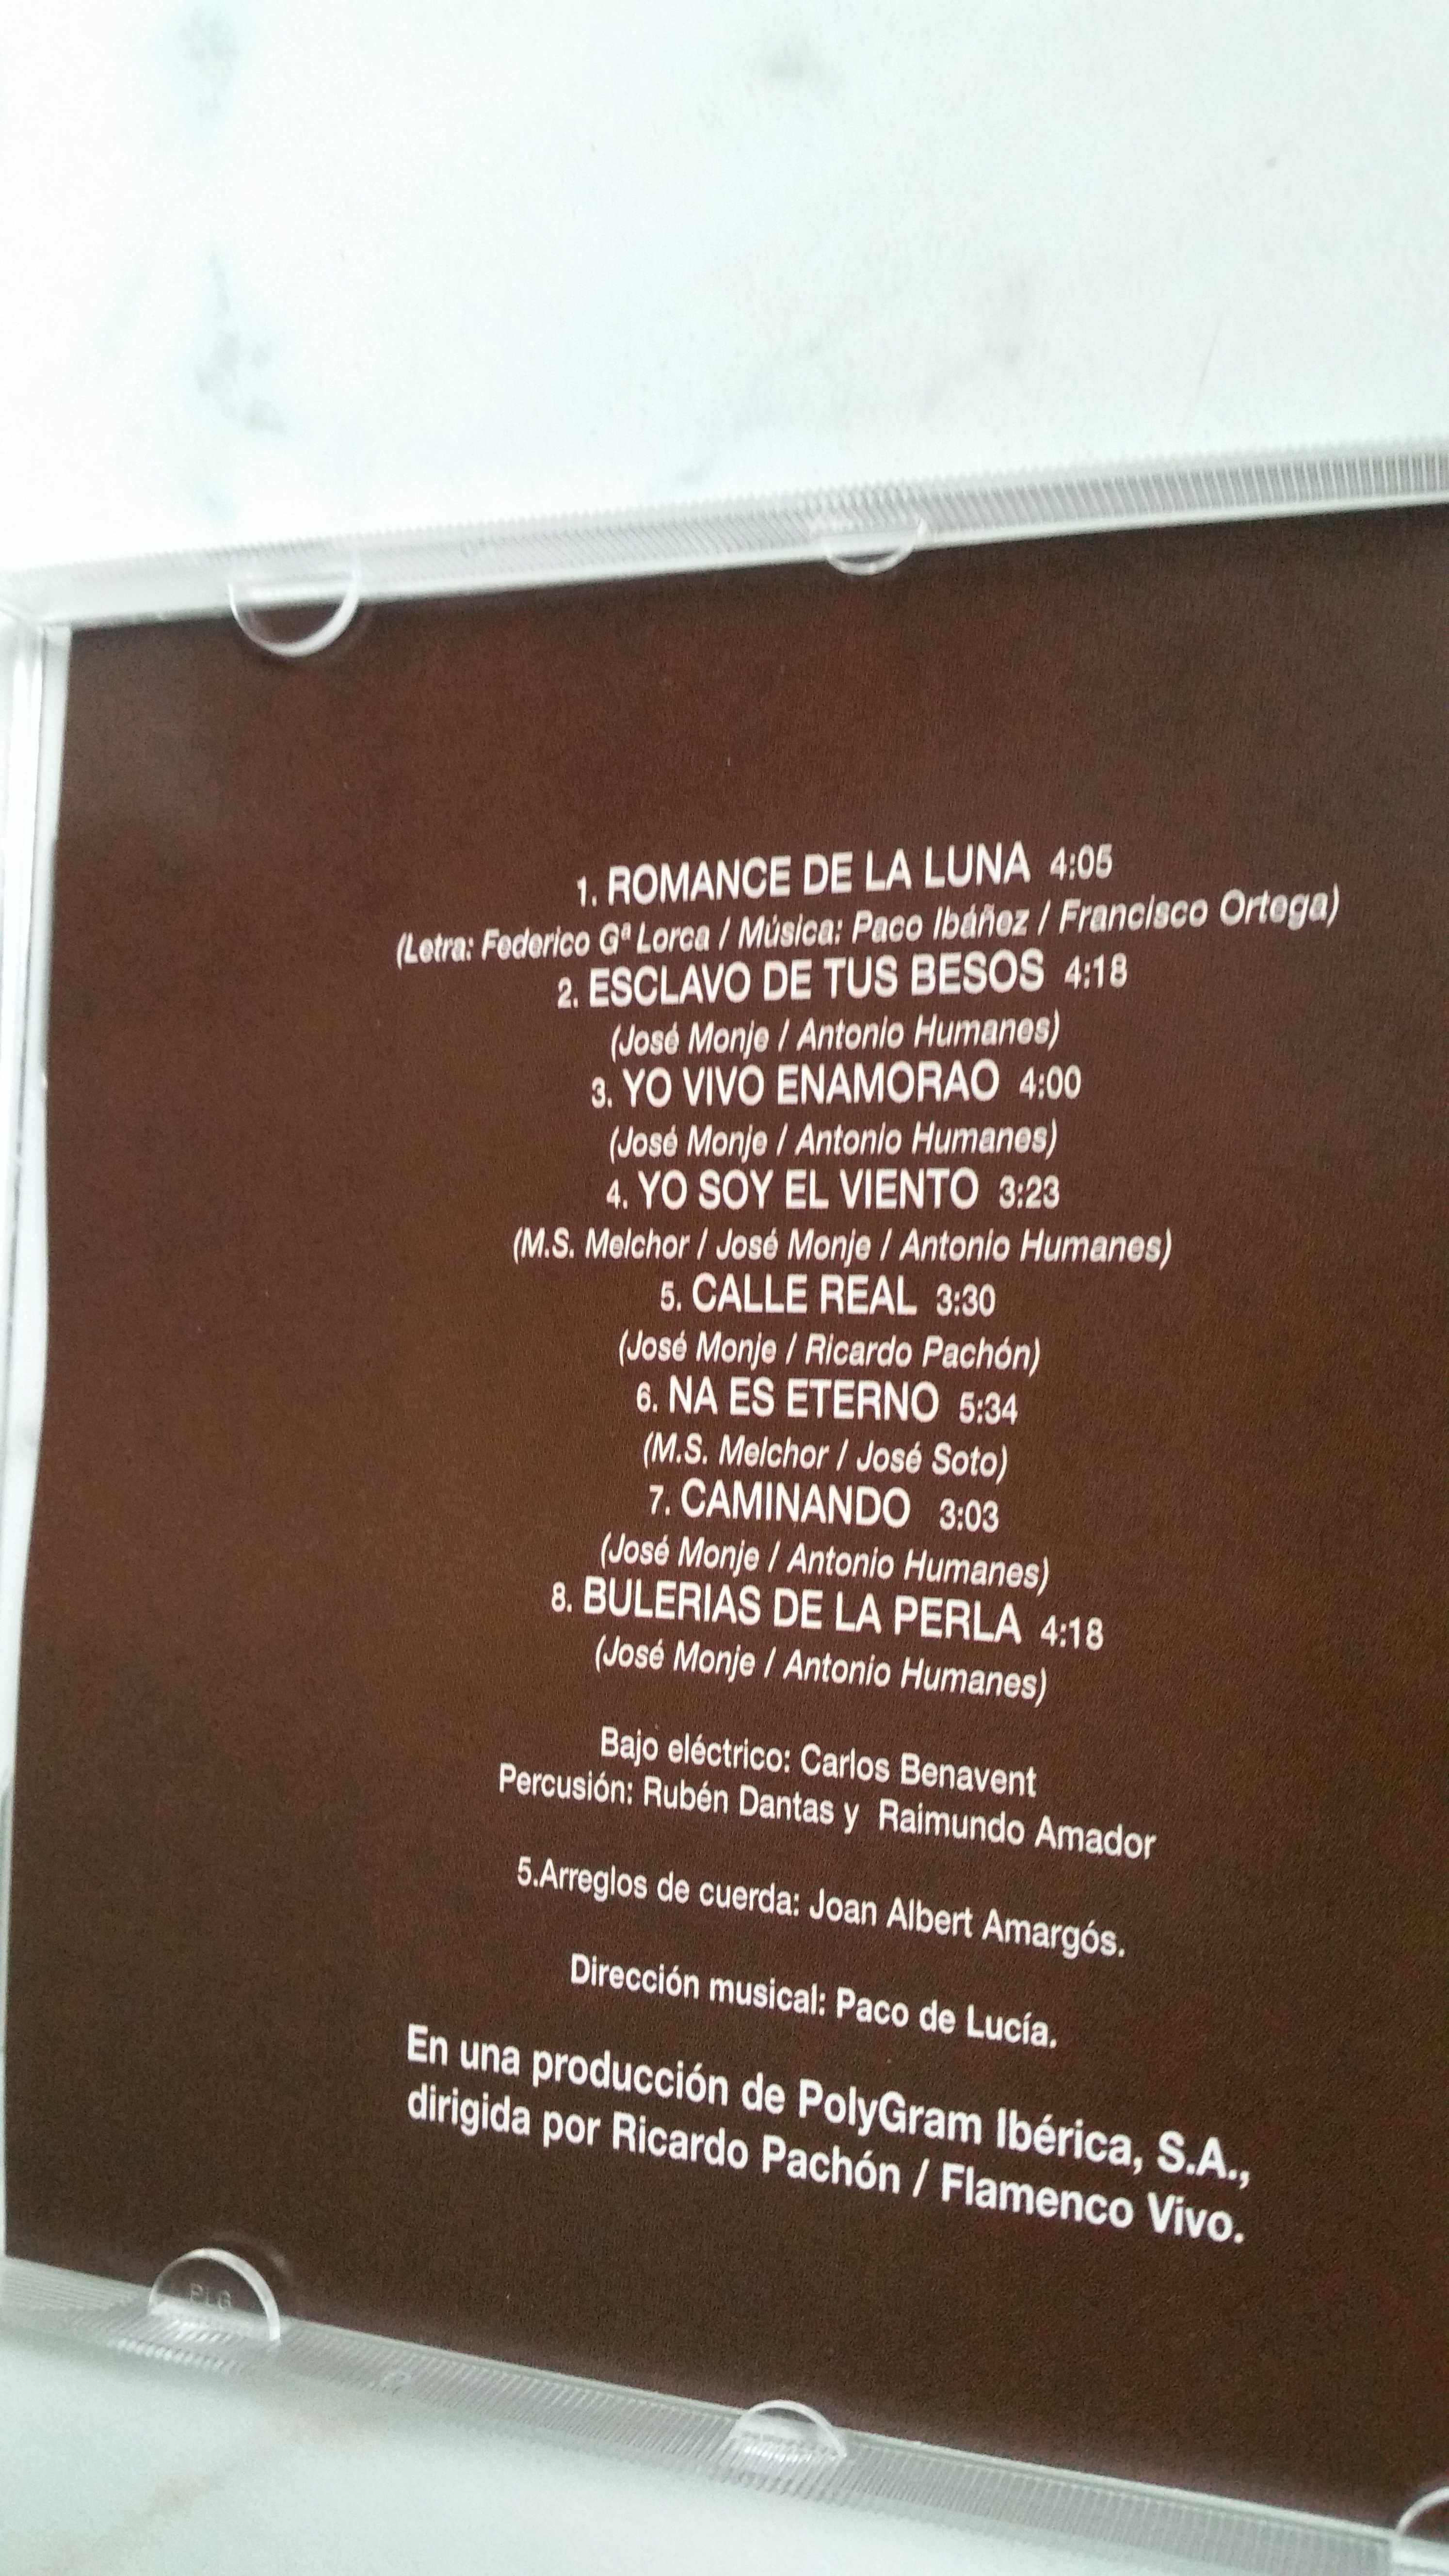 Camaron, Paco de Lucia y Tomatito - Calle Real (1983) CD